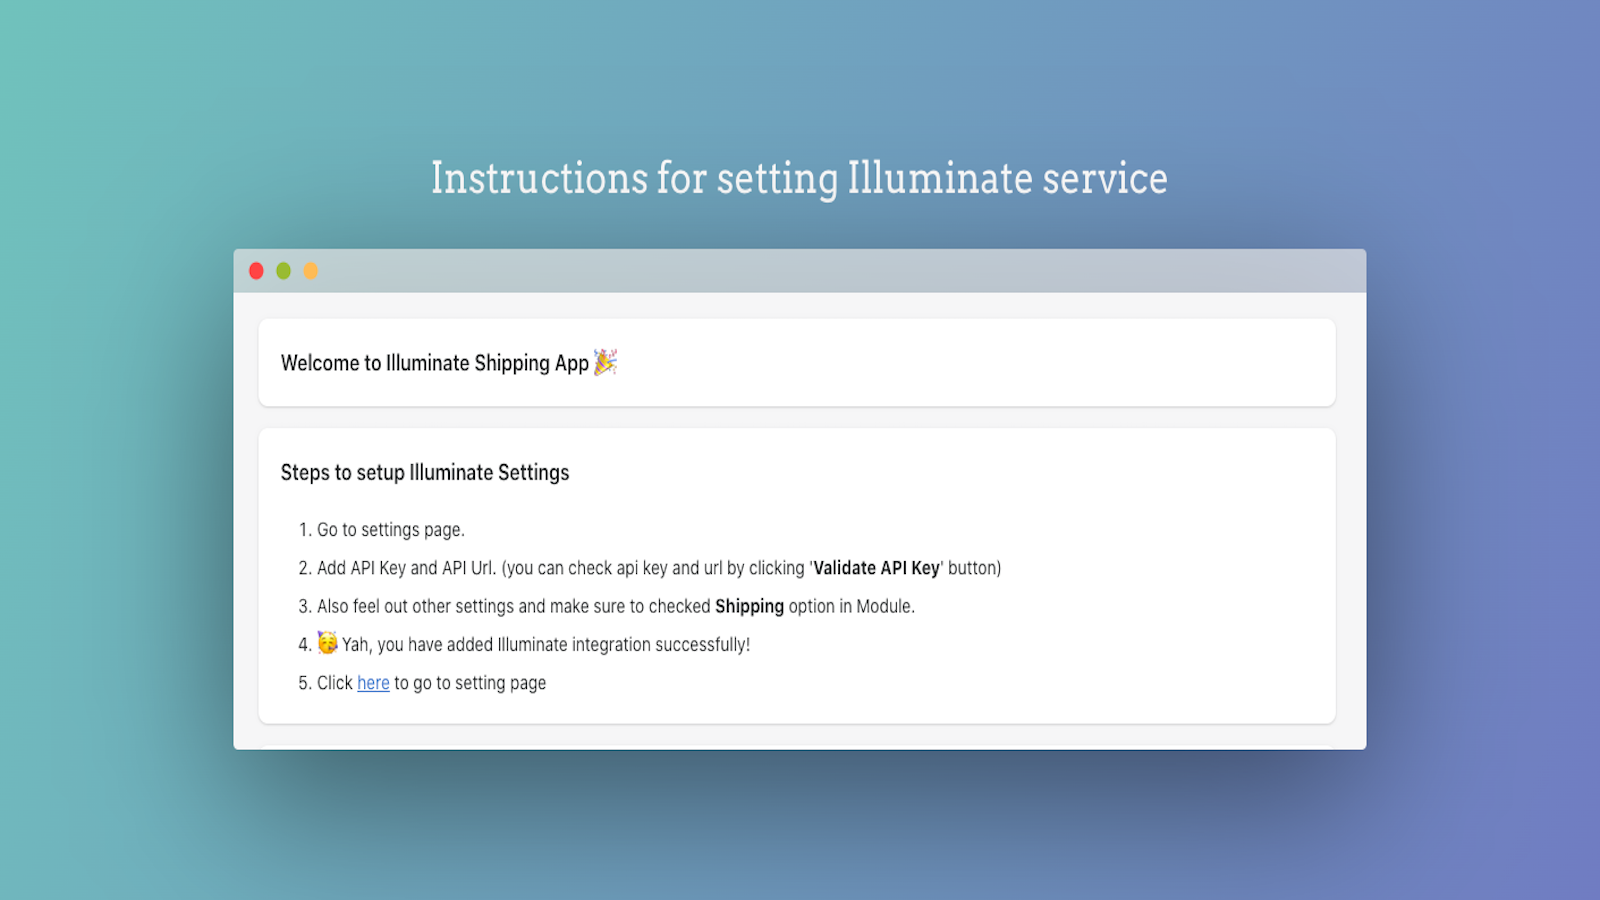 Settings screen instruction for illuminate settings